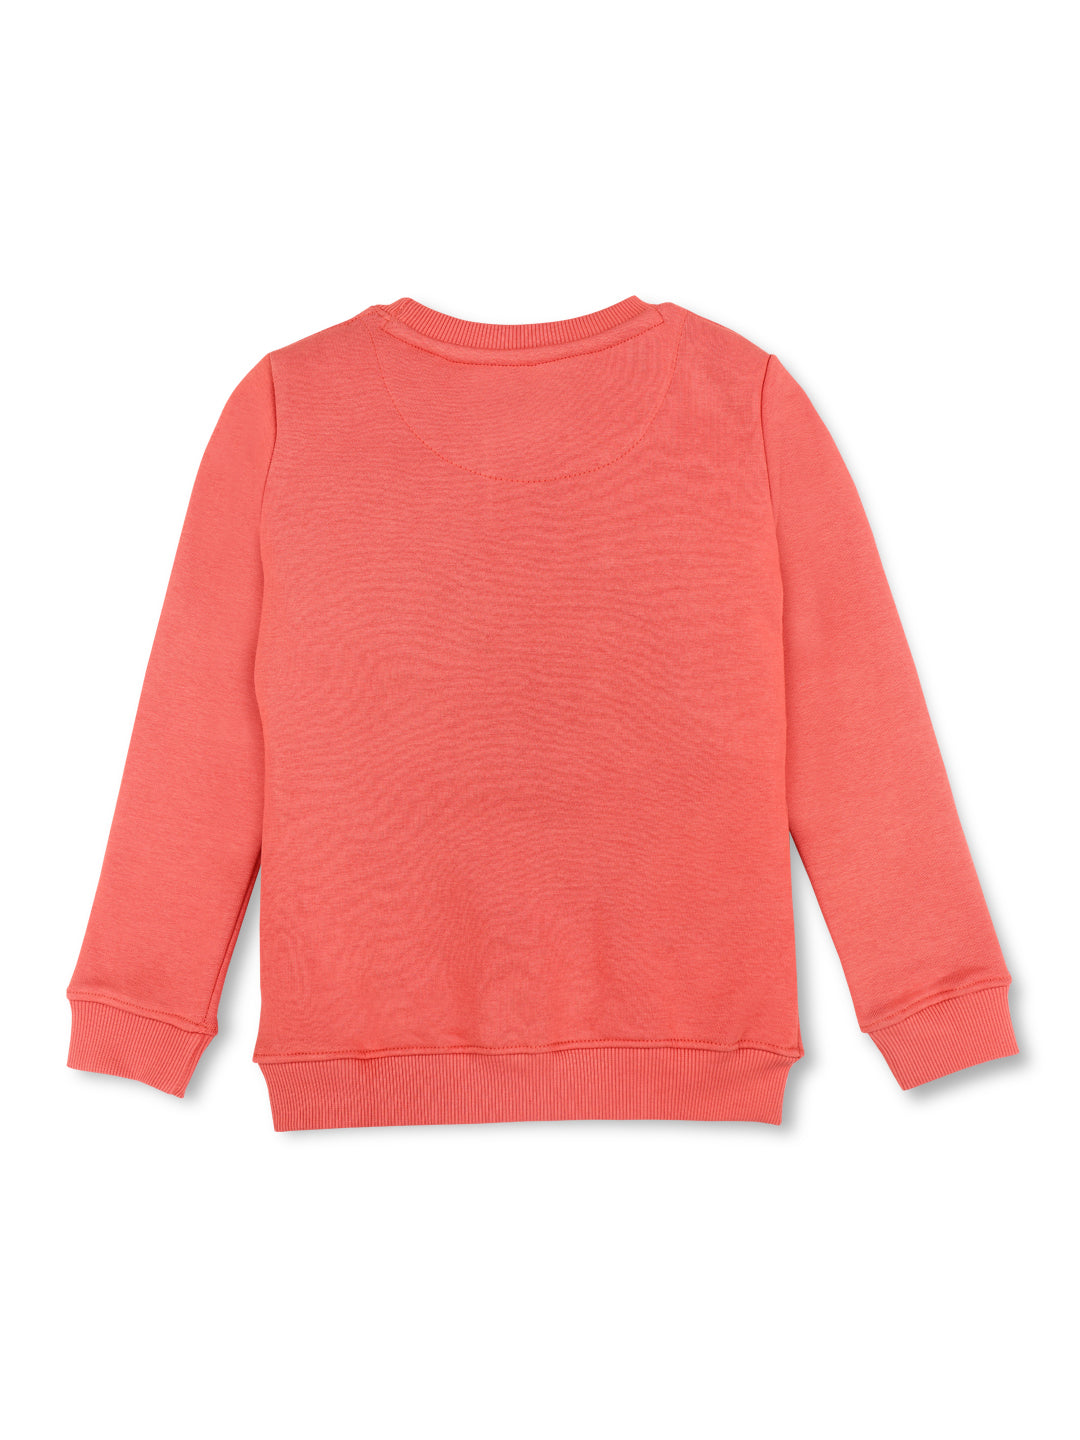 Girls Pink Printed Fleece Sweat Shirt Full Sleeves